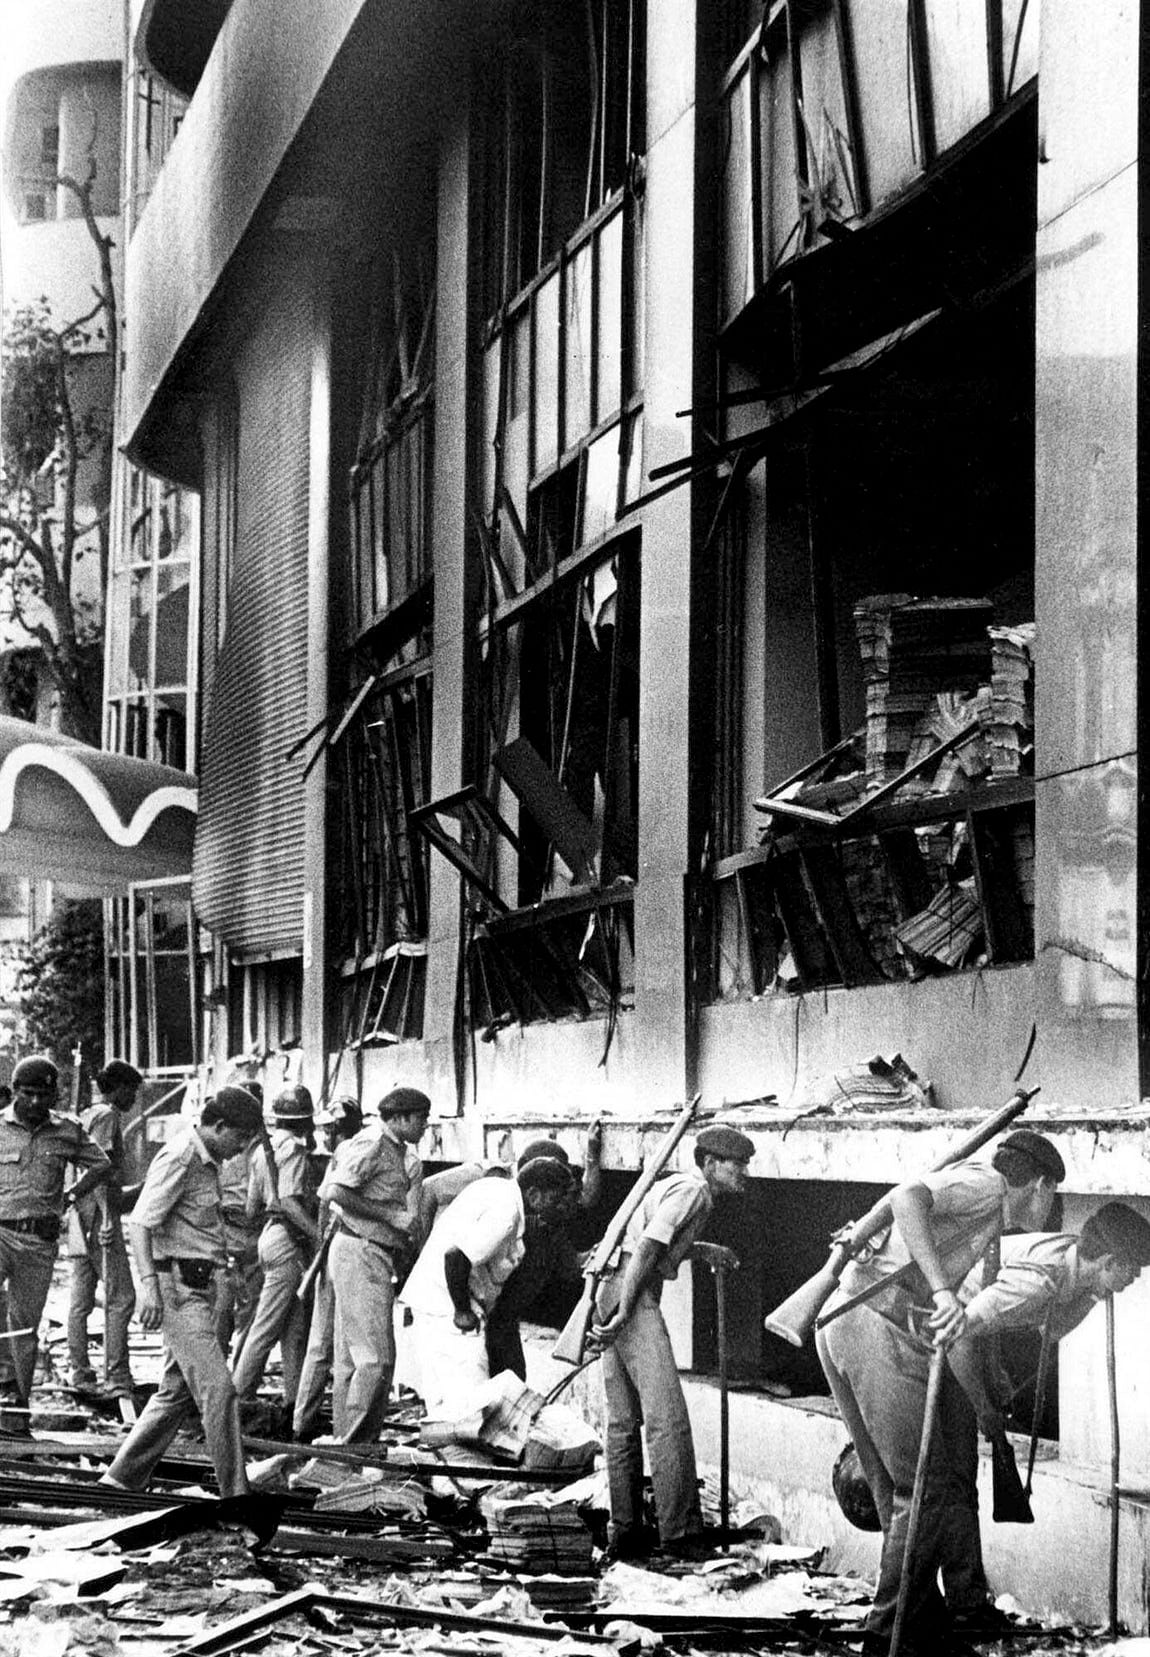 1993 Mumbai blast survivors say justice won’t be served till Dawood Ibrahim faces trial.  